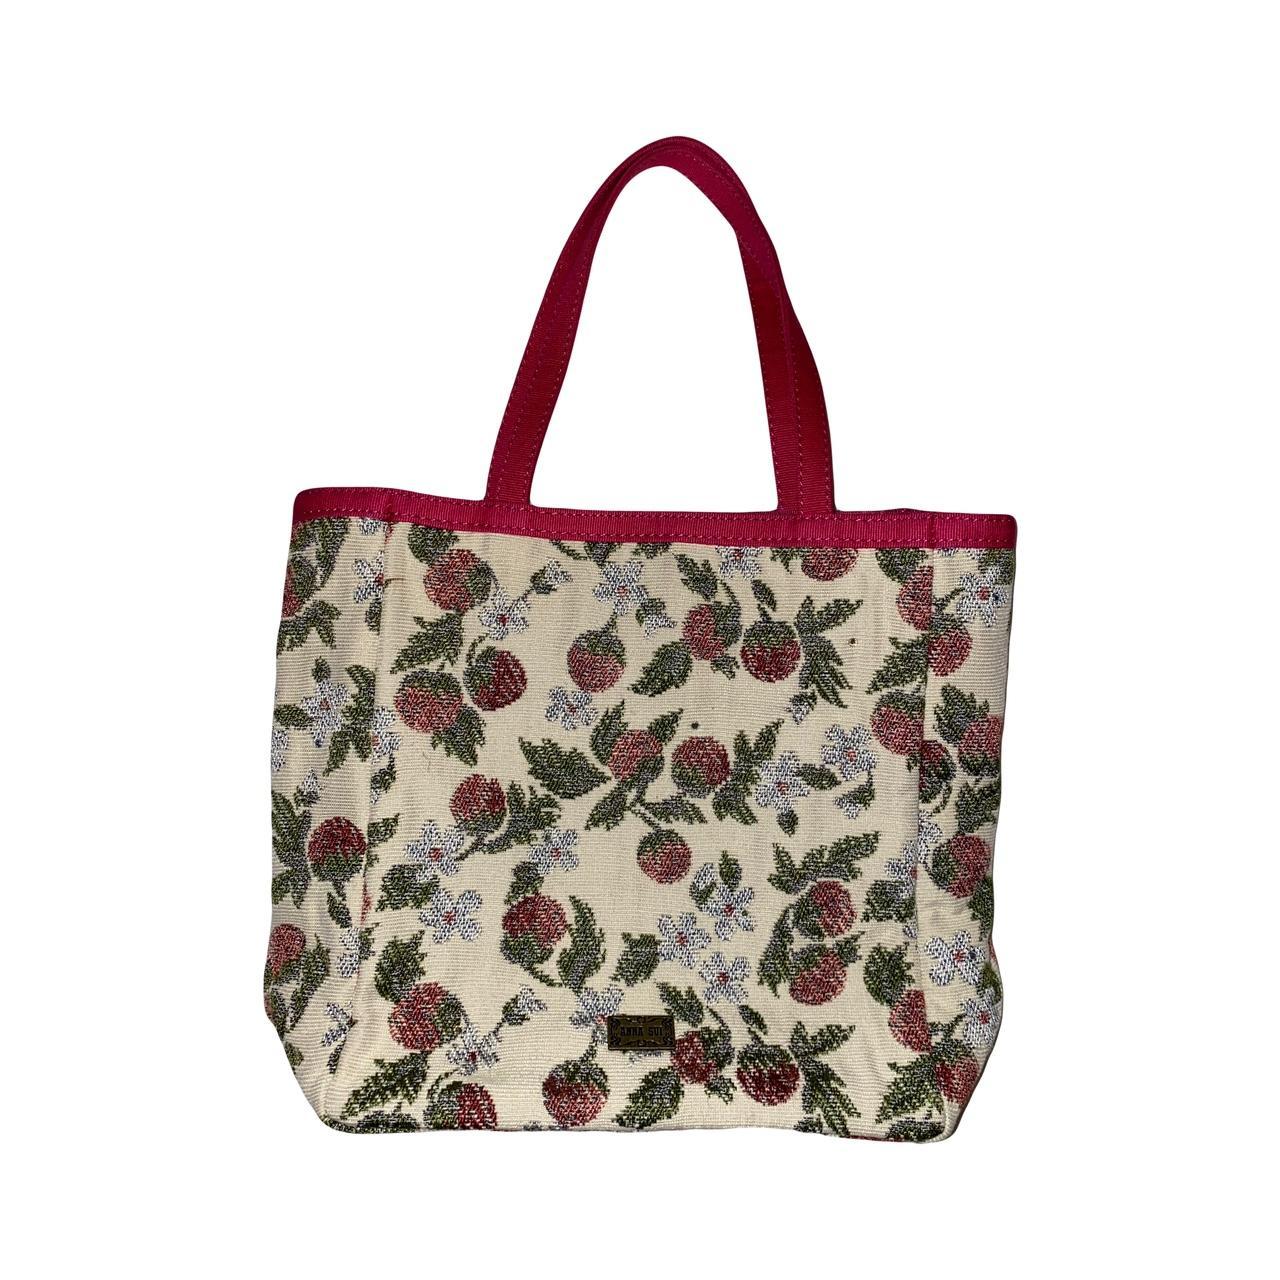 Anna Sui Women's Bag